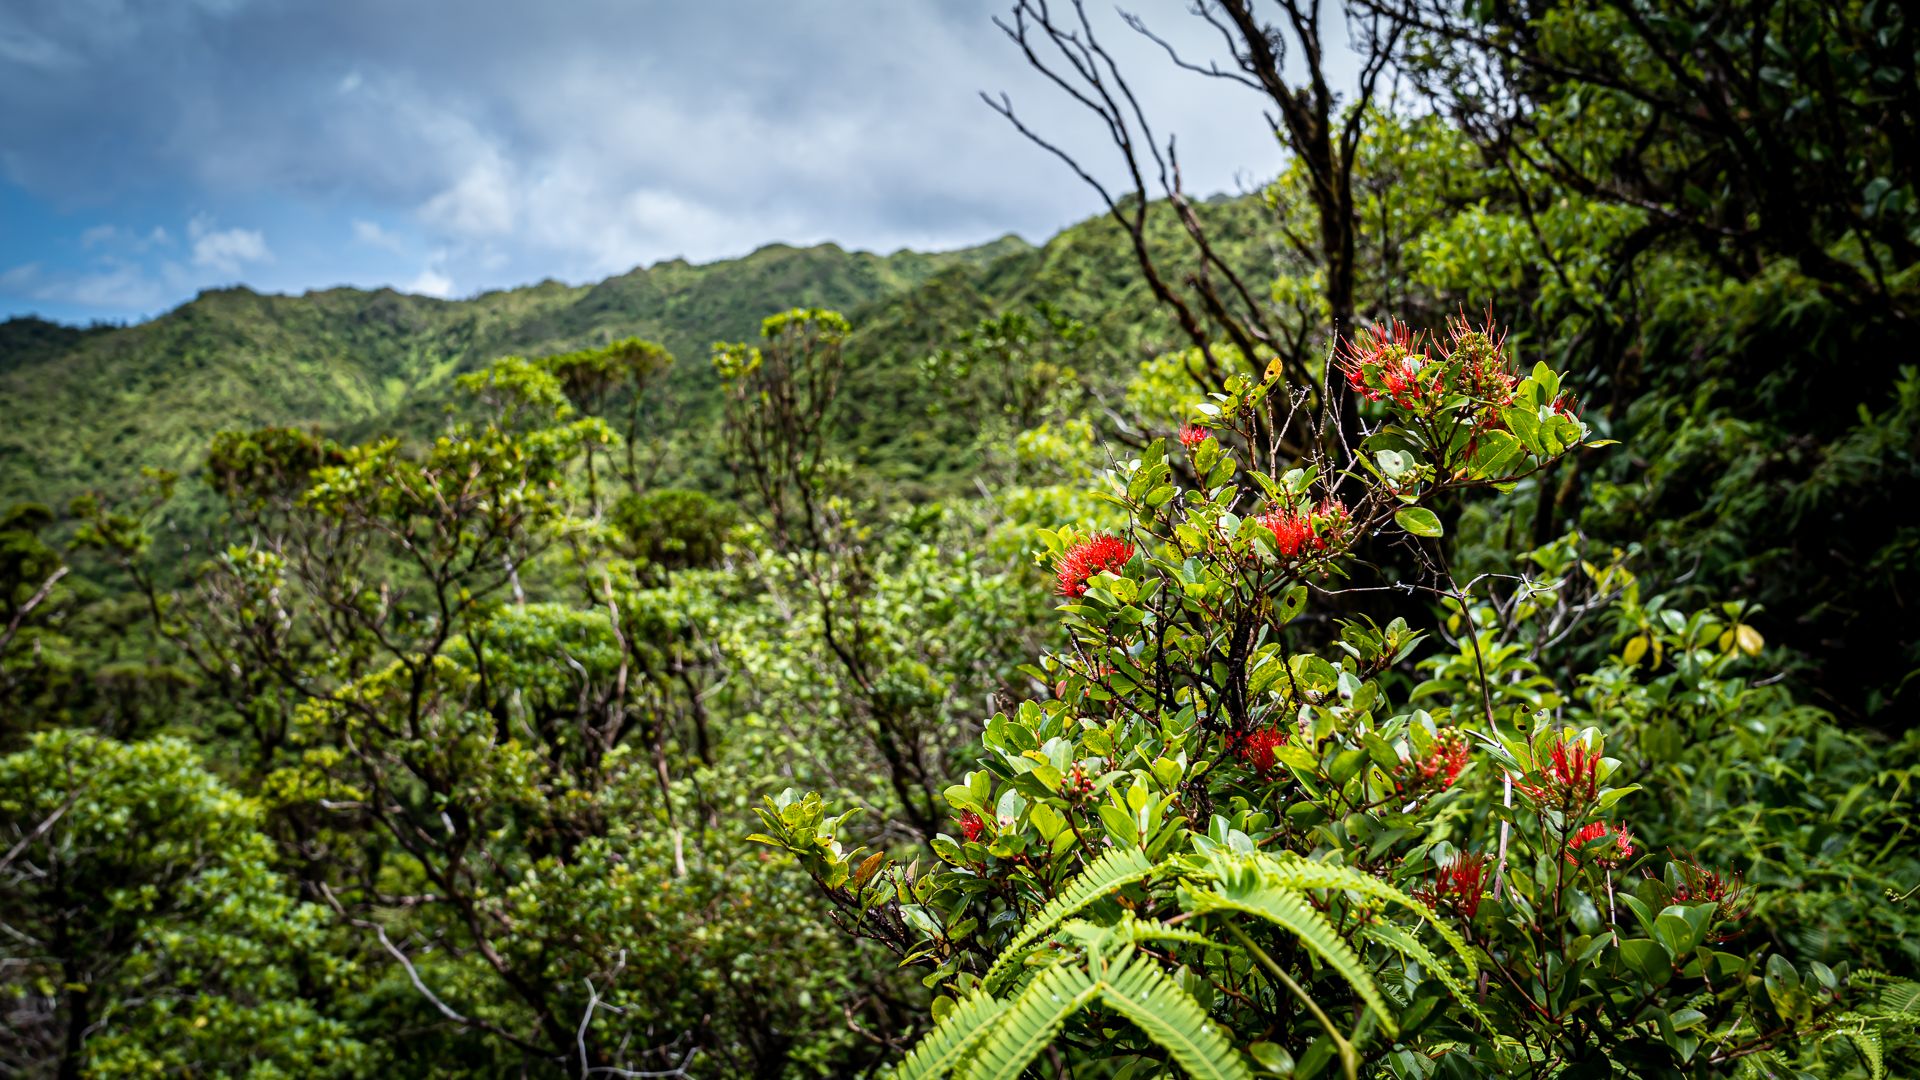 Approximately half of all native trees on Hawaii’s six main islands are ohias. Image by Kuʻu Kauanoe/Civil Beat. United States, 2020.